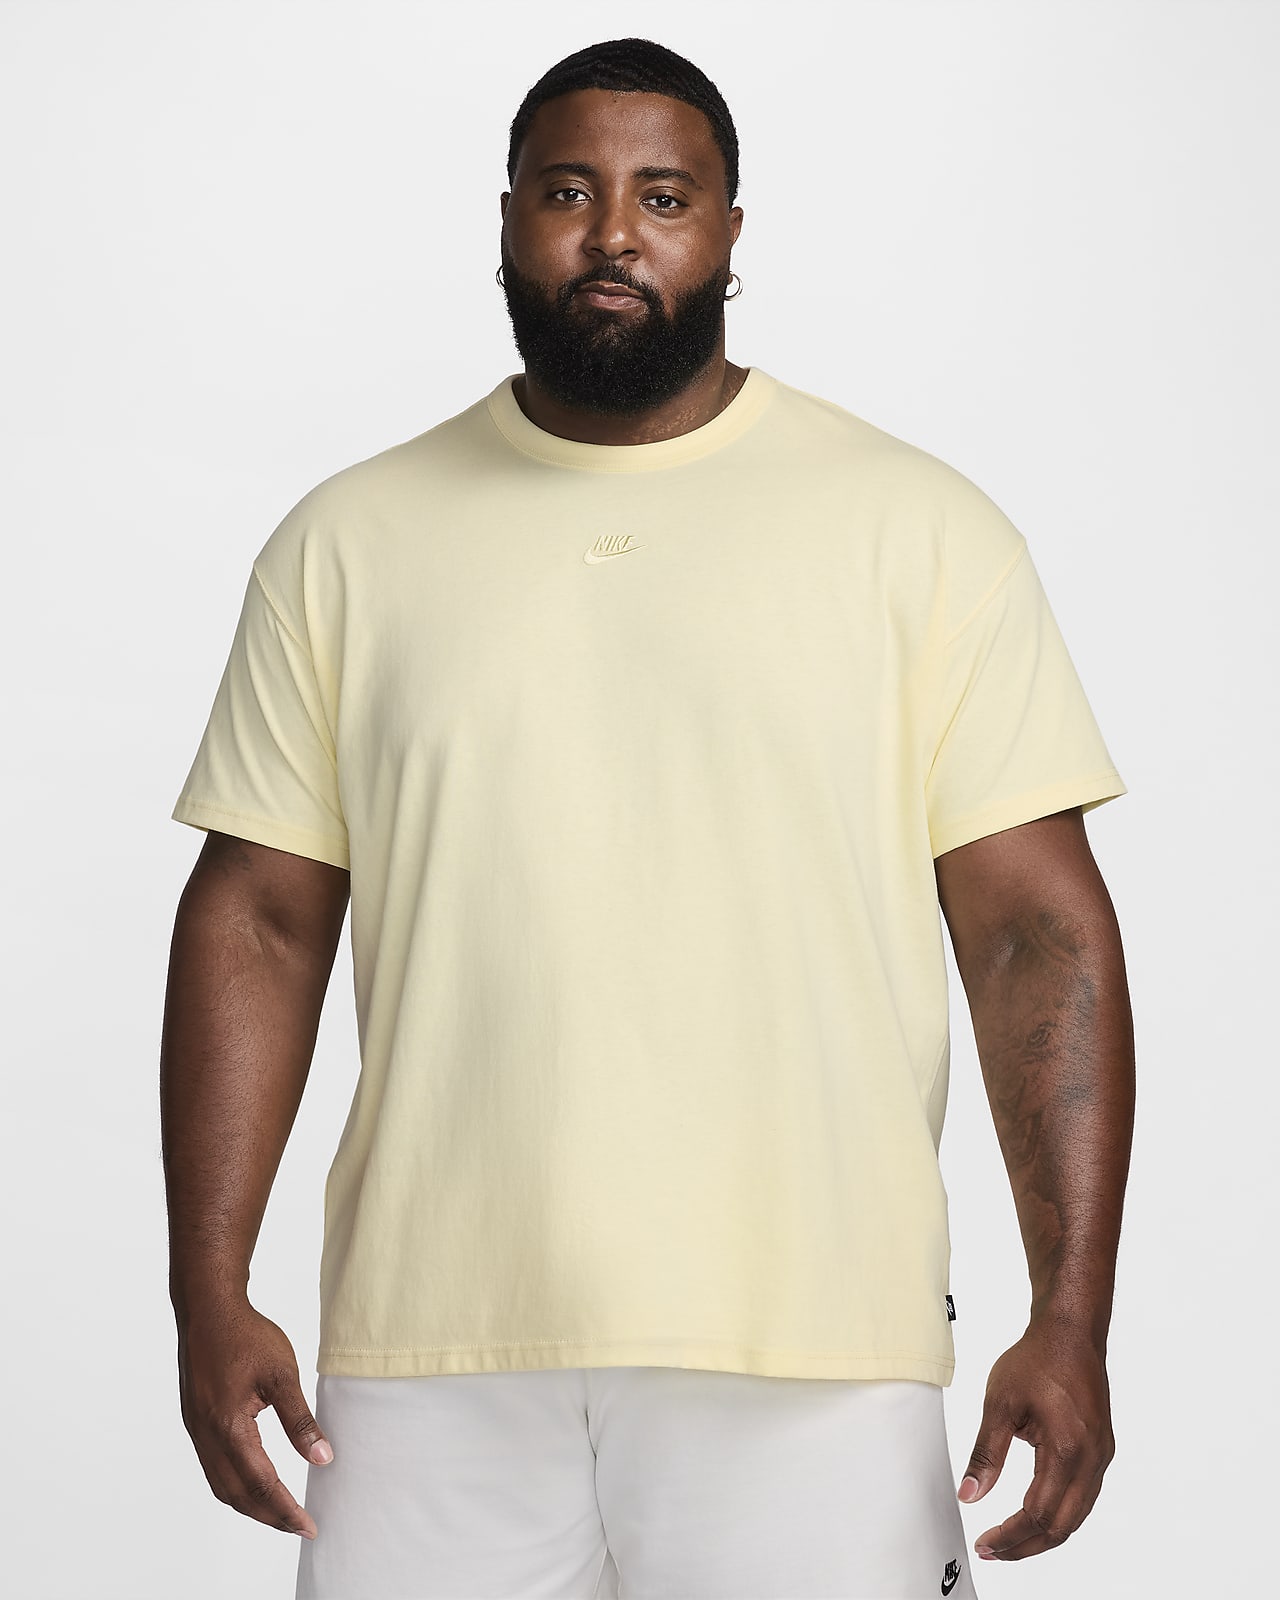 Nike Sportswear Premium Essentials-T-shirt til mænd